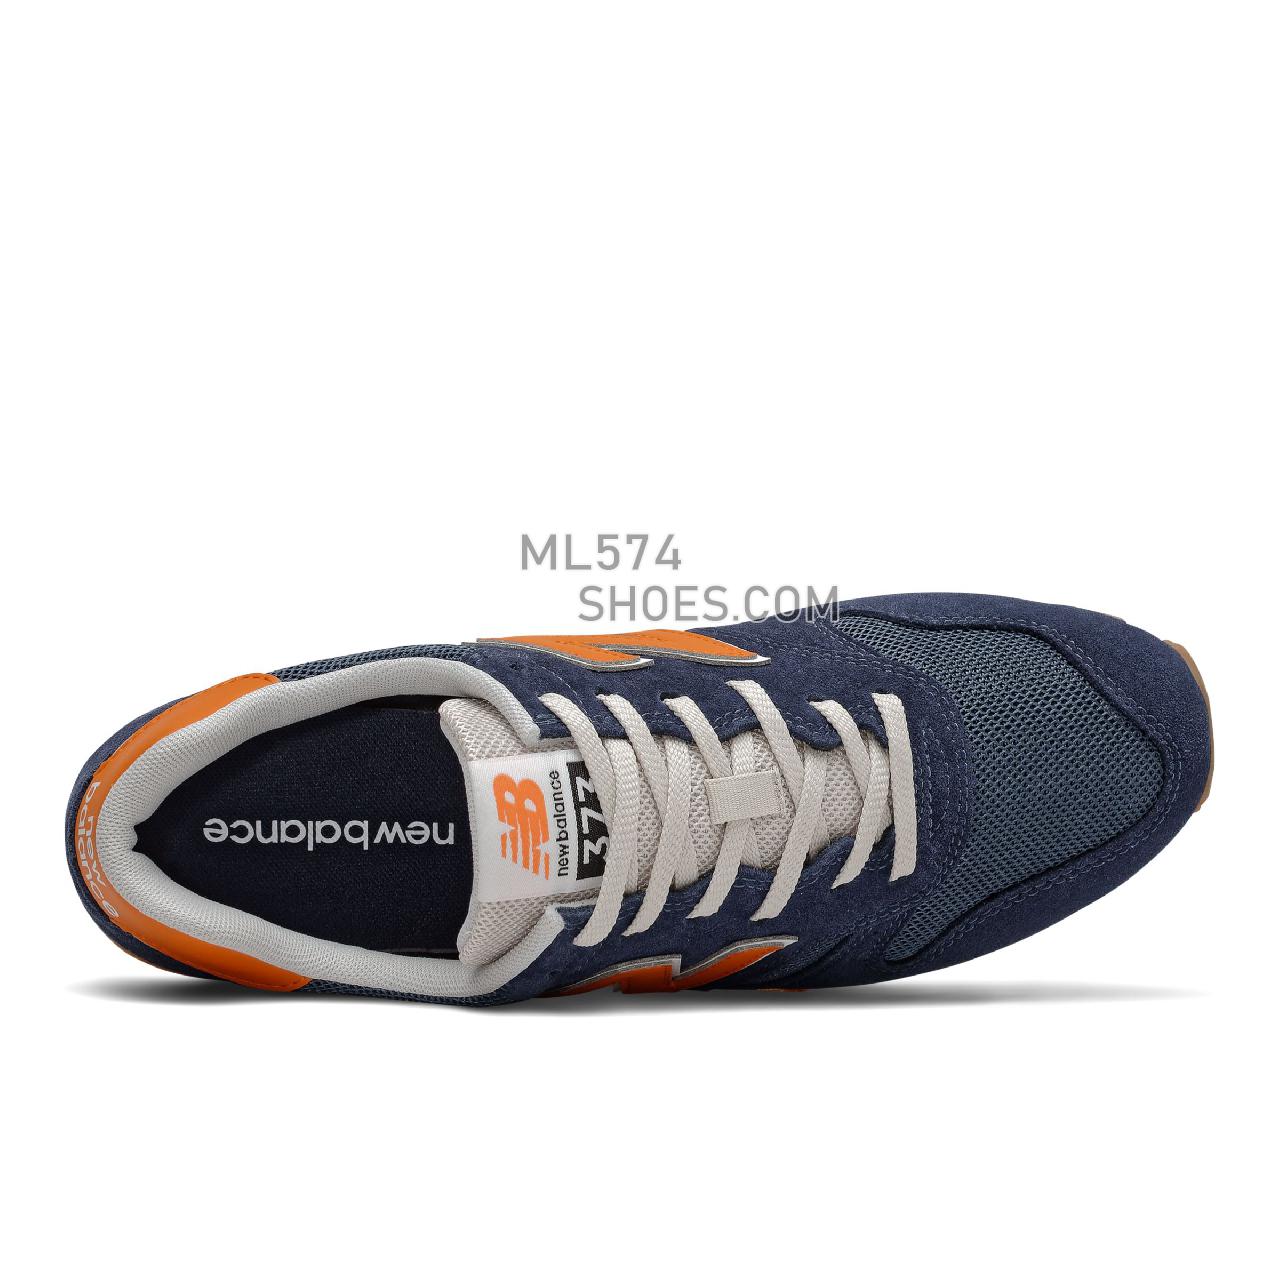 New Balance 373v2 - Men's Classic Sneakers - Pigment with Vintage Orange - ML373HN2